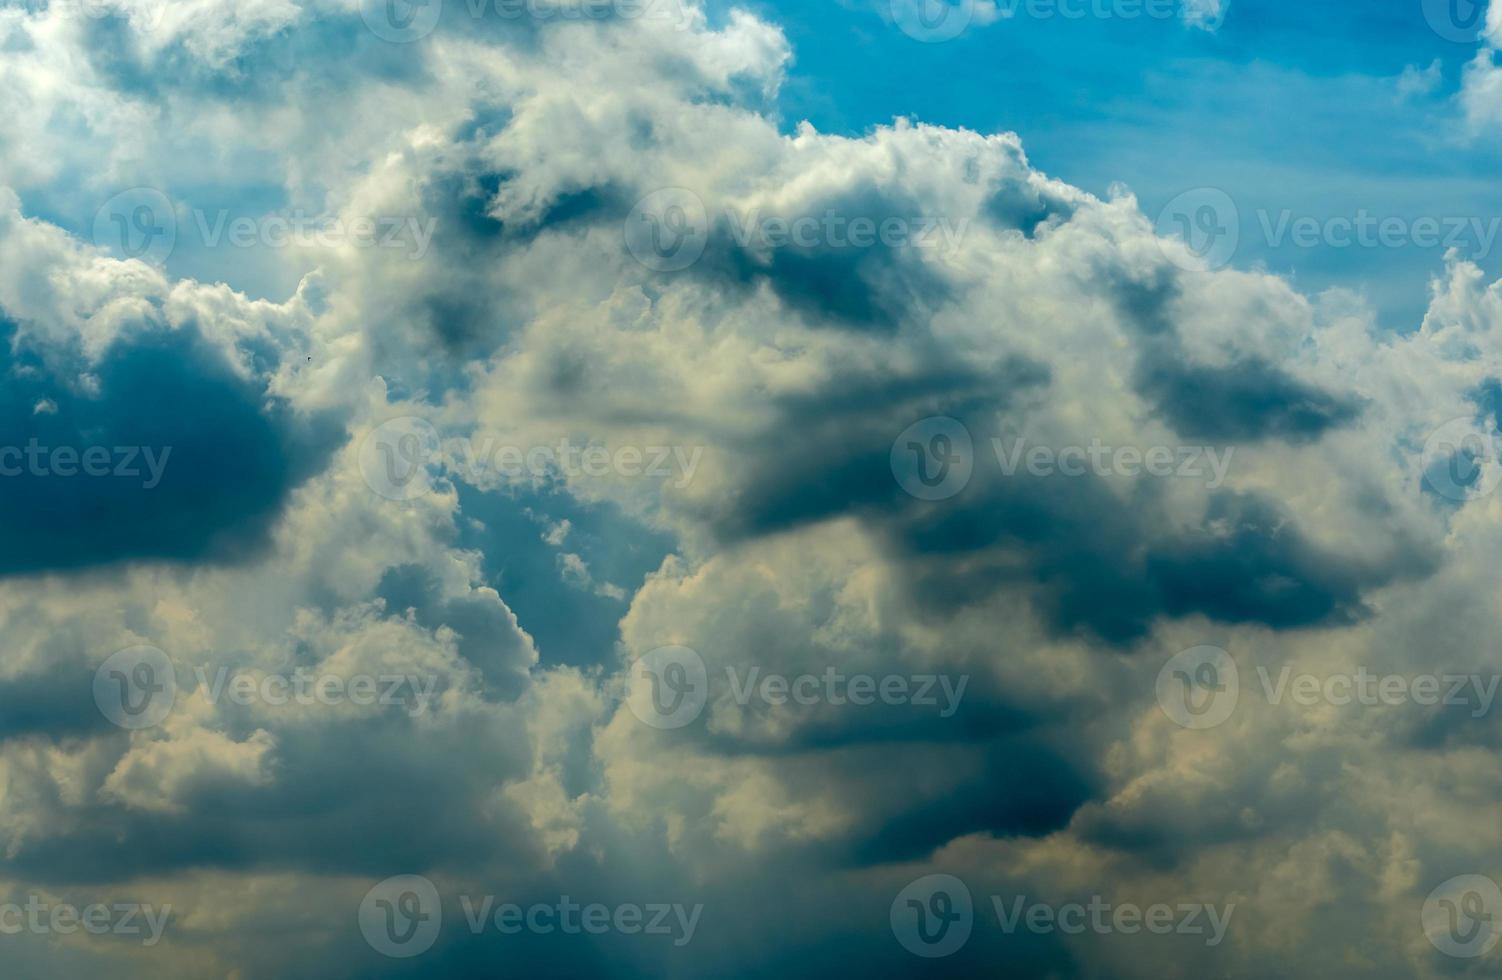 mooie blauwe lucht en witte cumulus wolken abstracte achtergrond. wolkenlandschap achtergrond. blauwe lucht en pluizige witte wolken op zonnige dag. natuur weer. heldere daghemel voor gelukkige dagachtergrond. foto